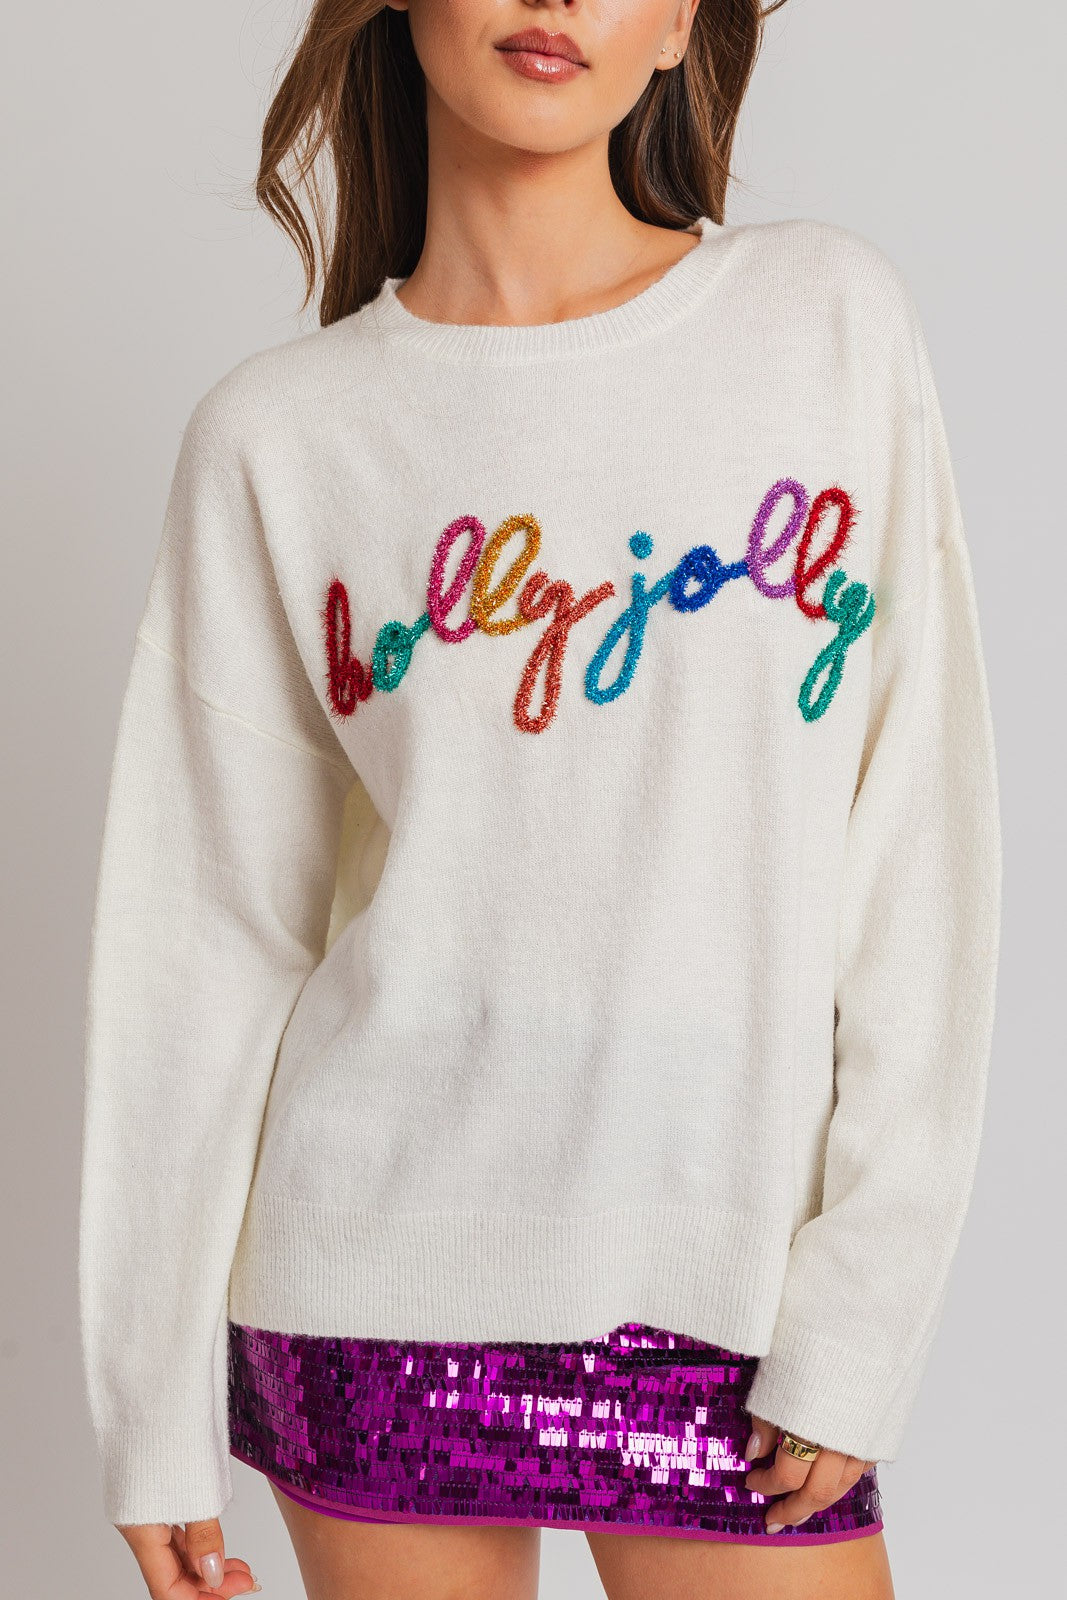 Holly Jolly Glitter Script Sweater PREORDER 11/5